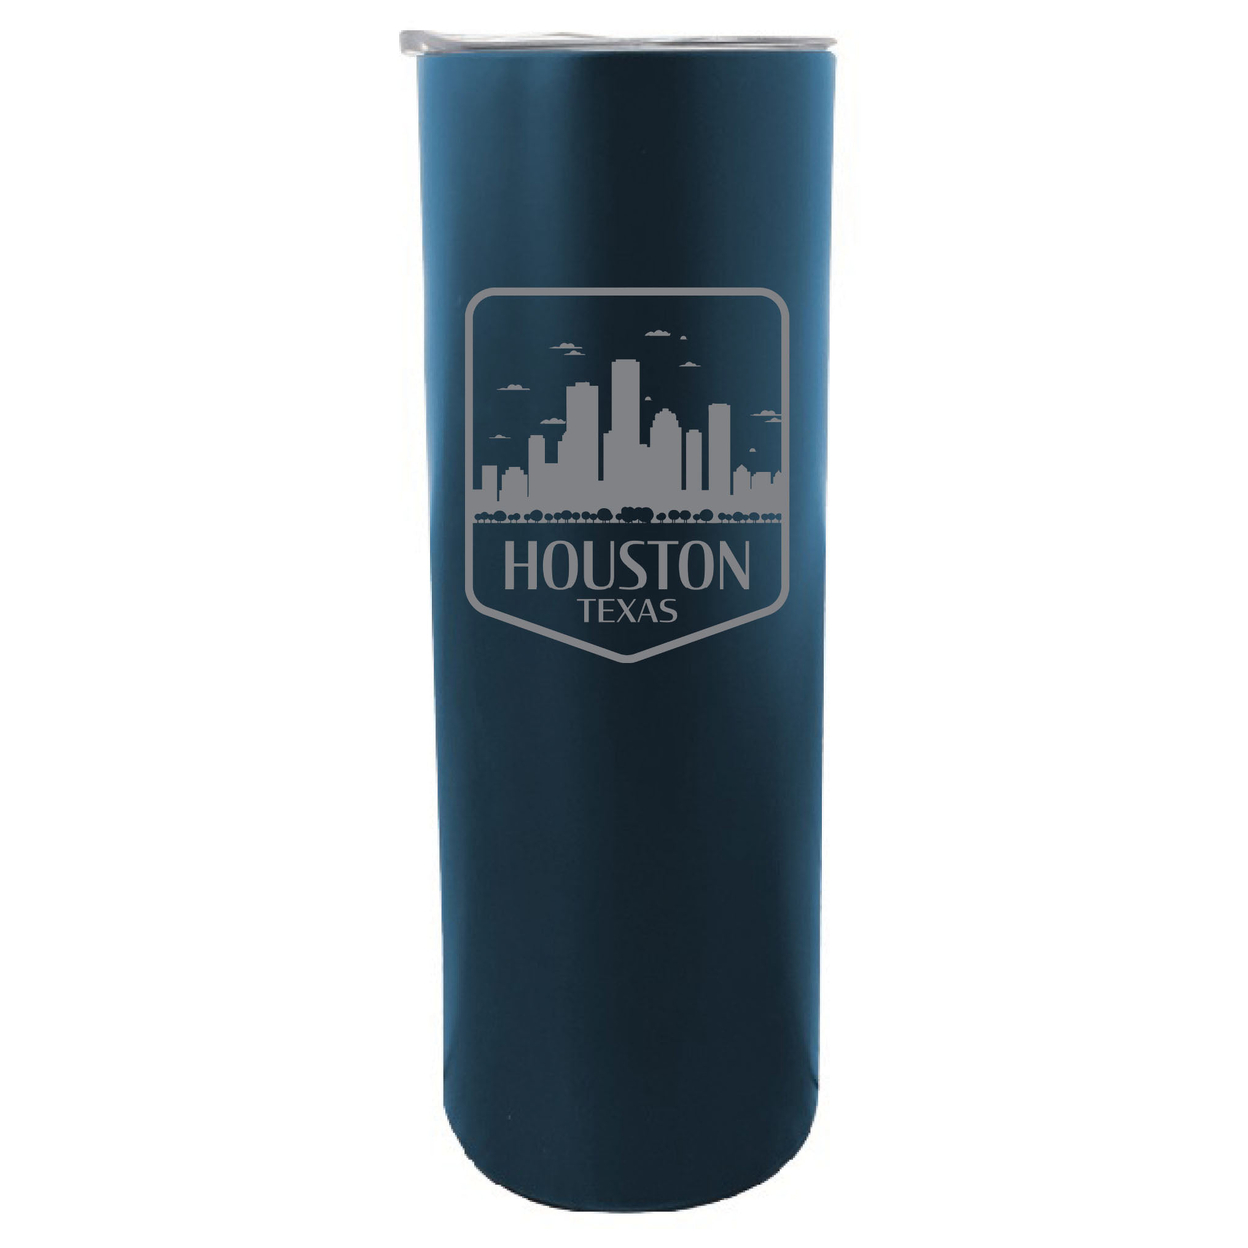 Houston Texas Souvenir 20 Oz Engraved Insulated Stainless Steel Skinny Tumbler - Seafoam,,2-Pack